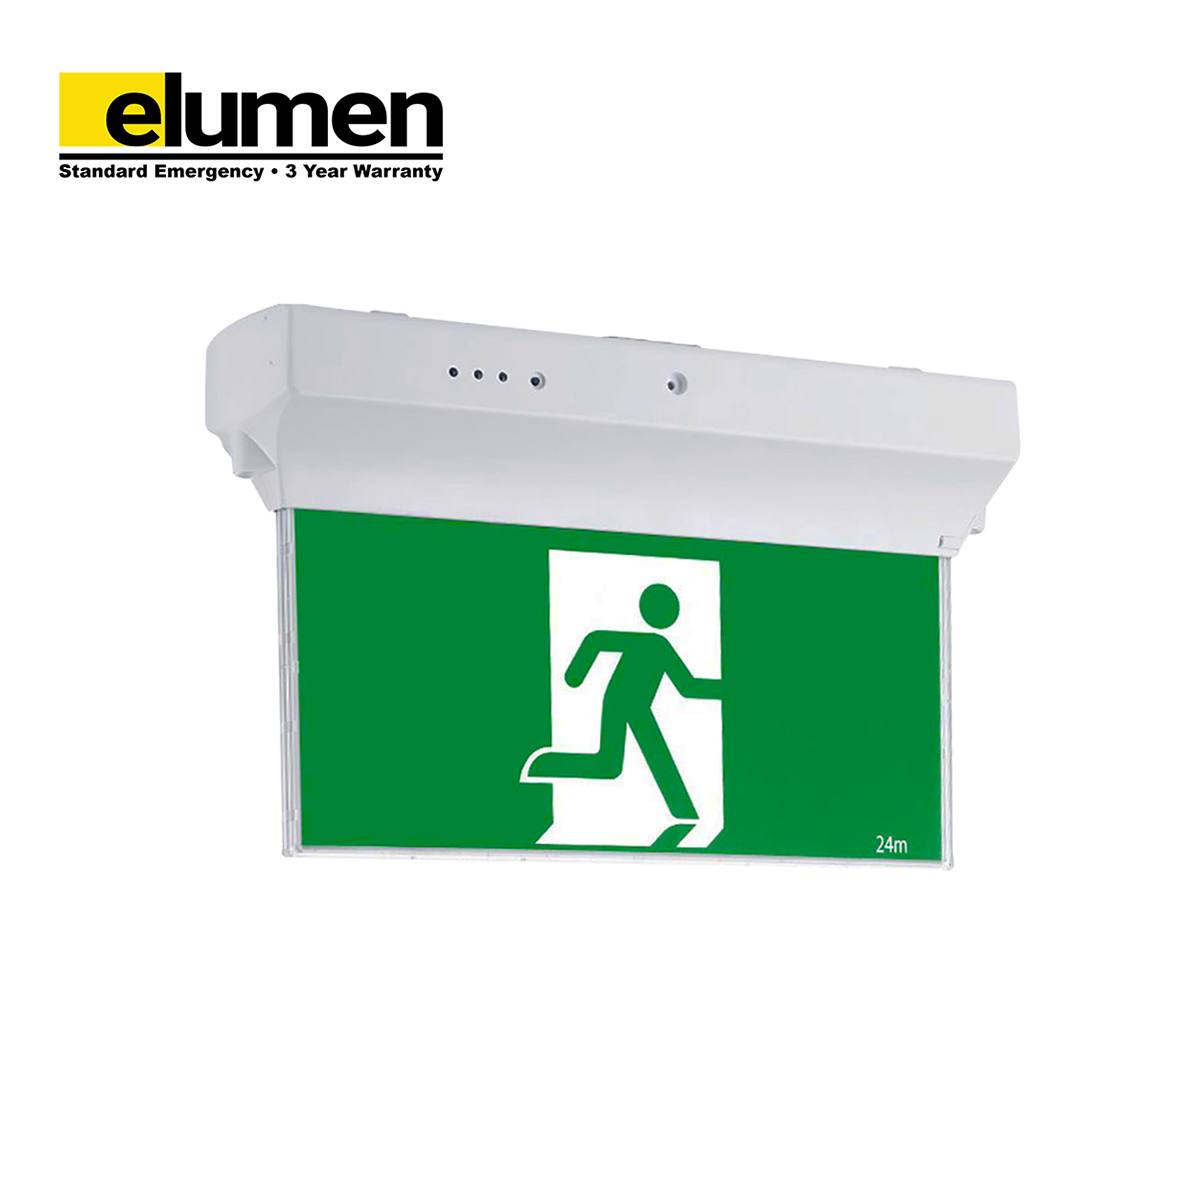 LED Blade Exit- Emergency - Premium Exit & Emergency Lighting from elumen - Shop now at Firebox Australia